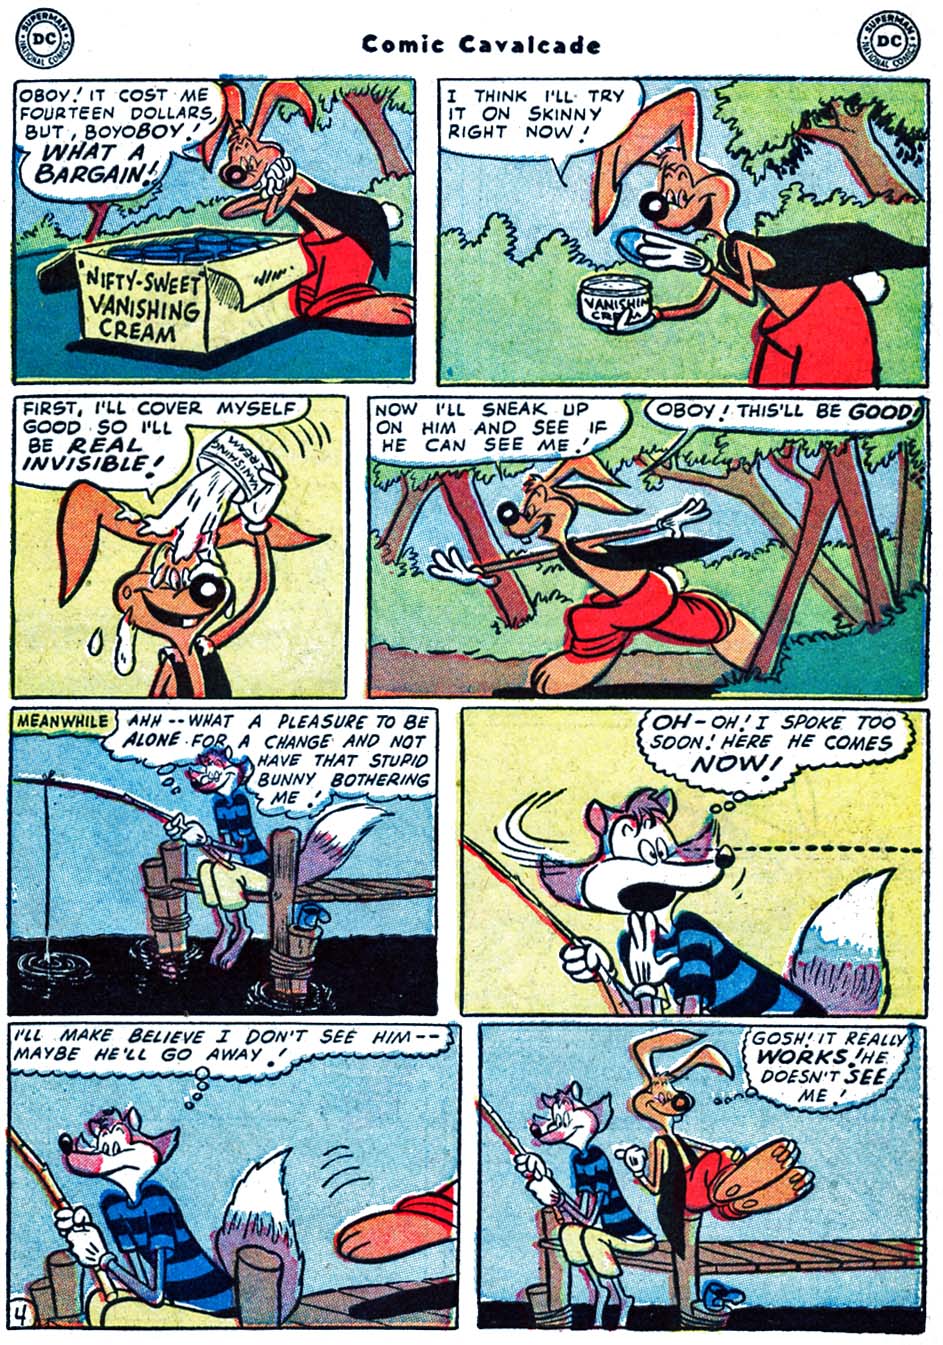 Comic Cavalcade issue 62 - Page 13